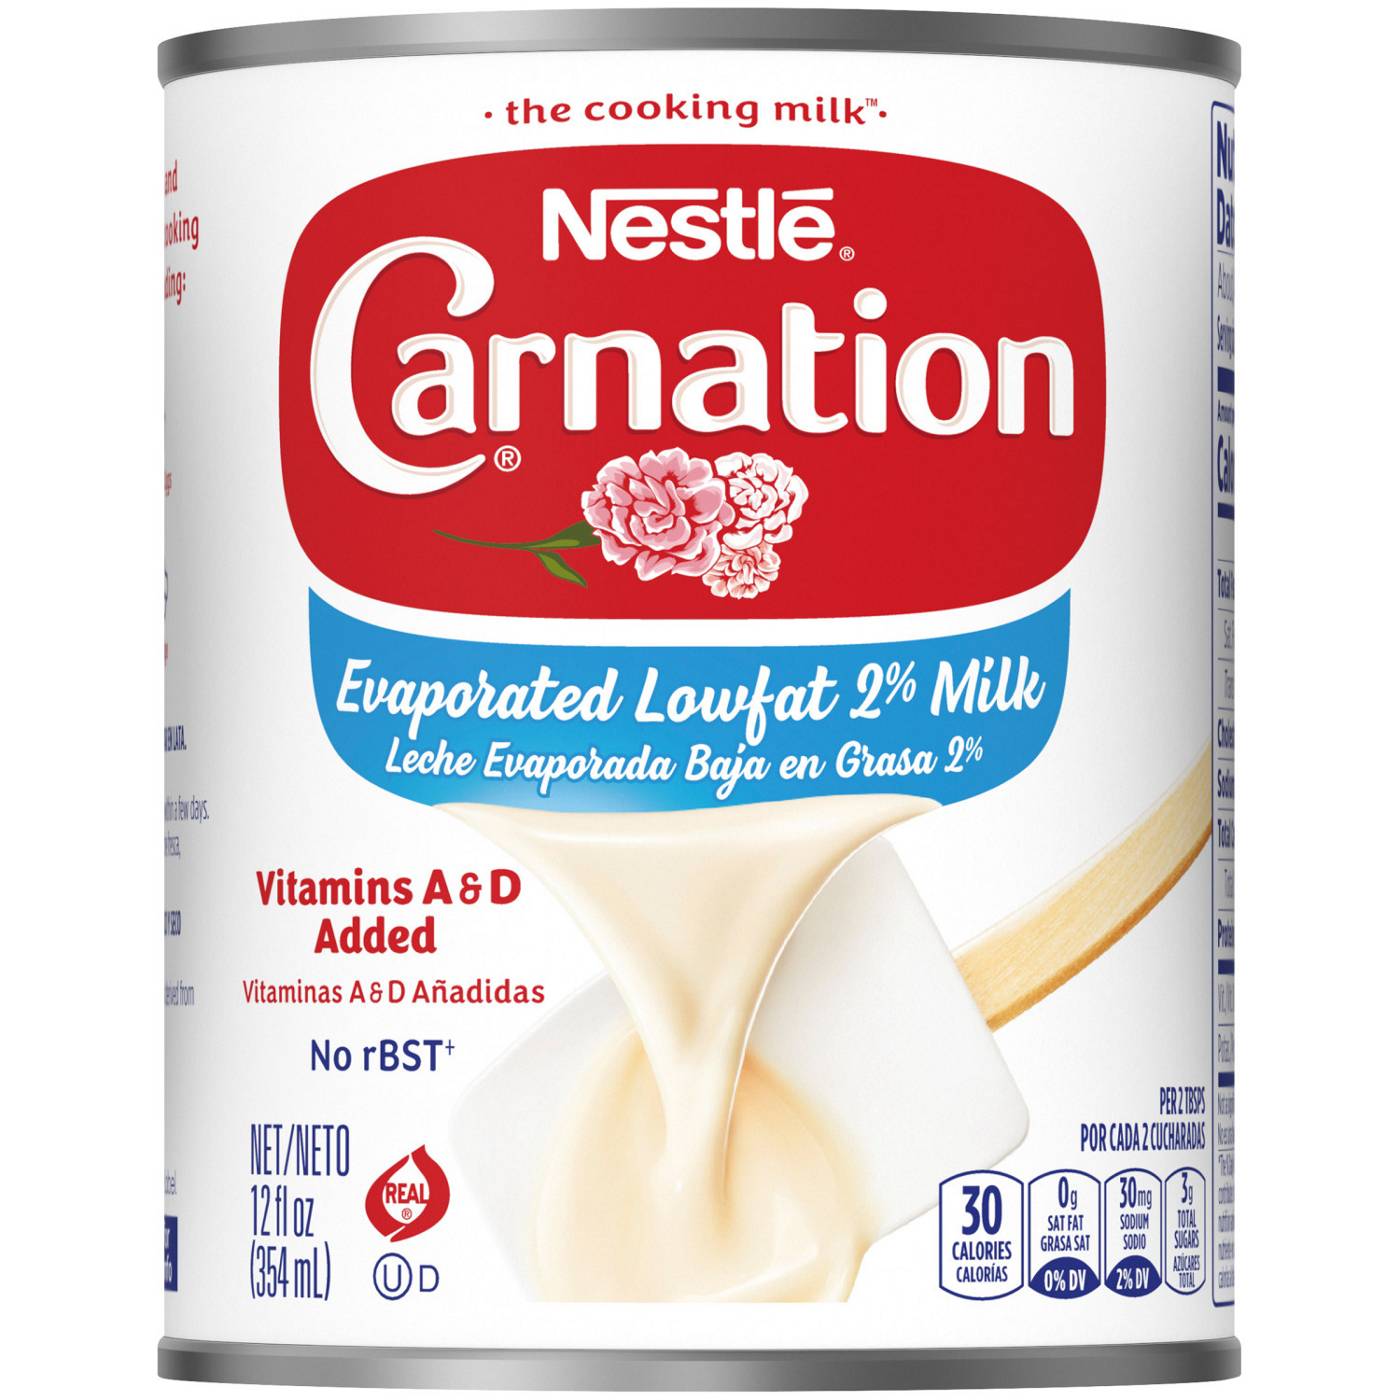 Nestle Carnation Evaporated Lowfat 2% Milk; image 7 of 8